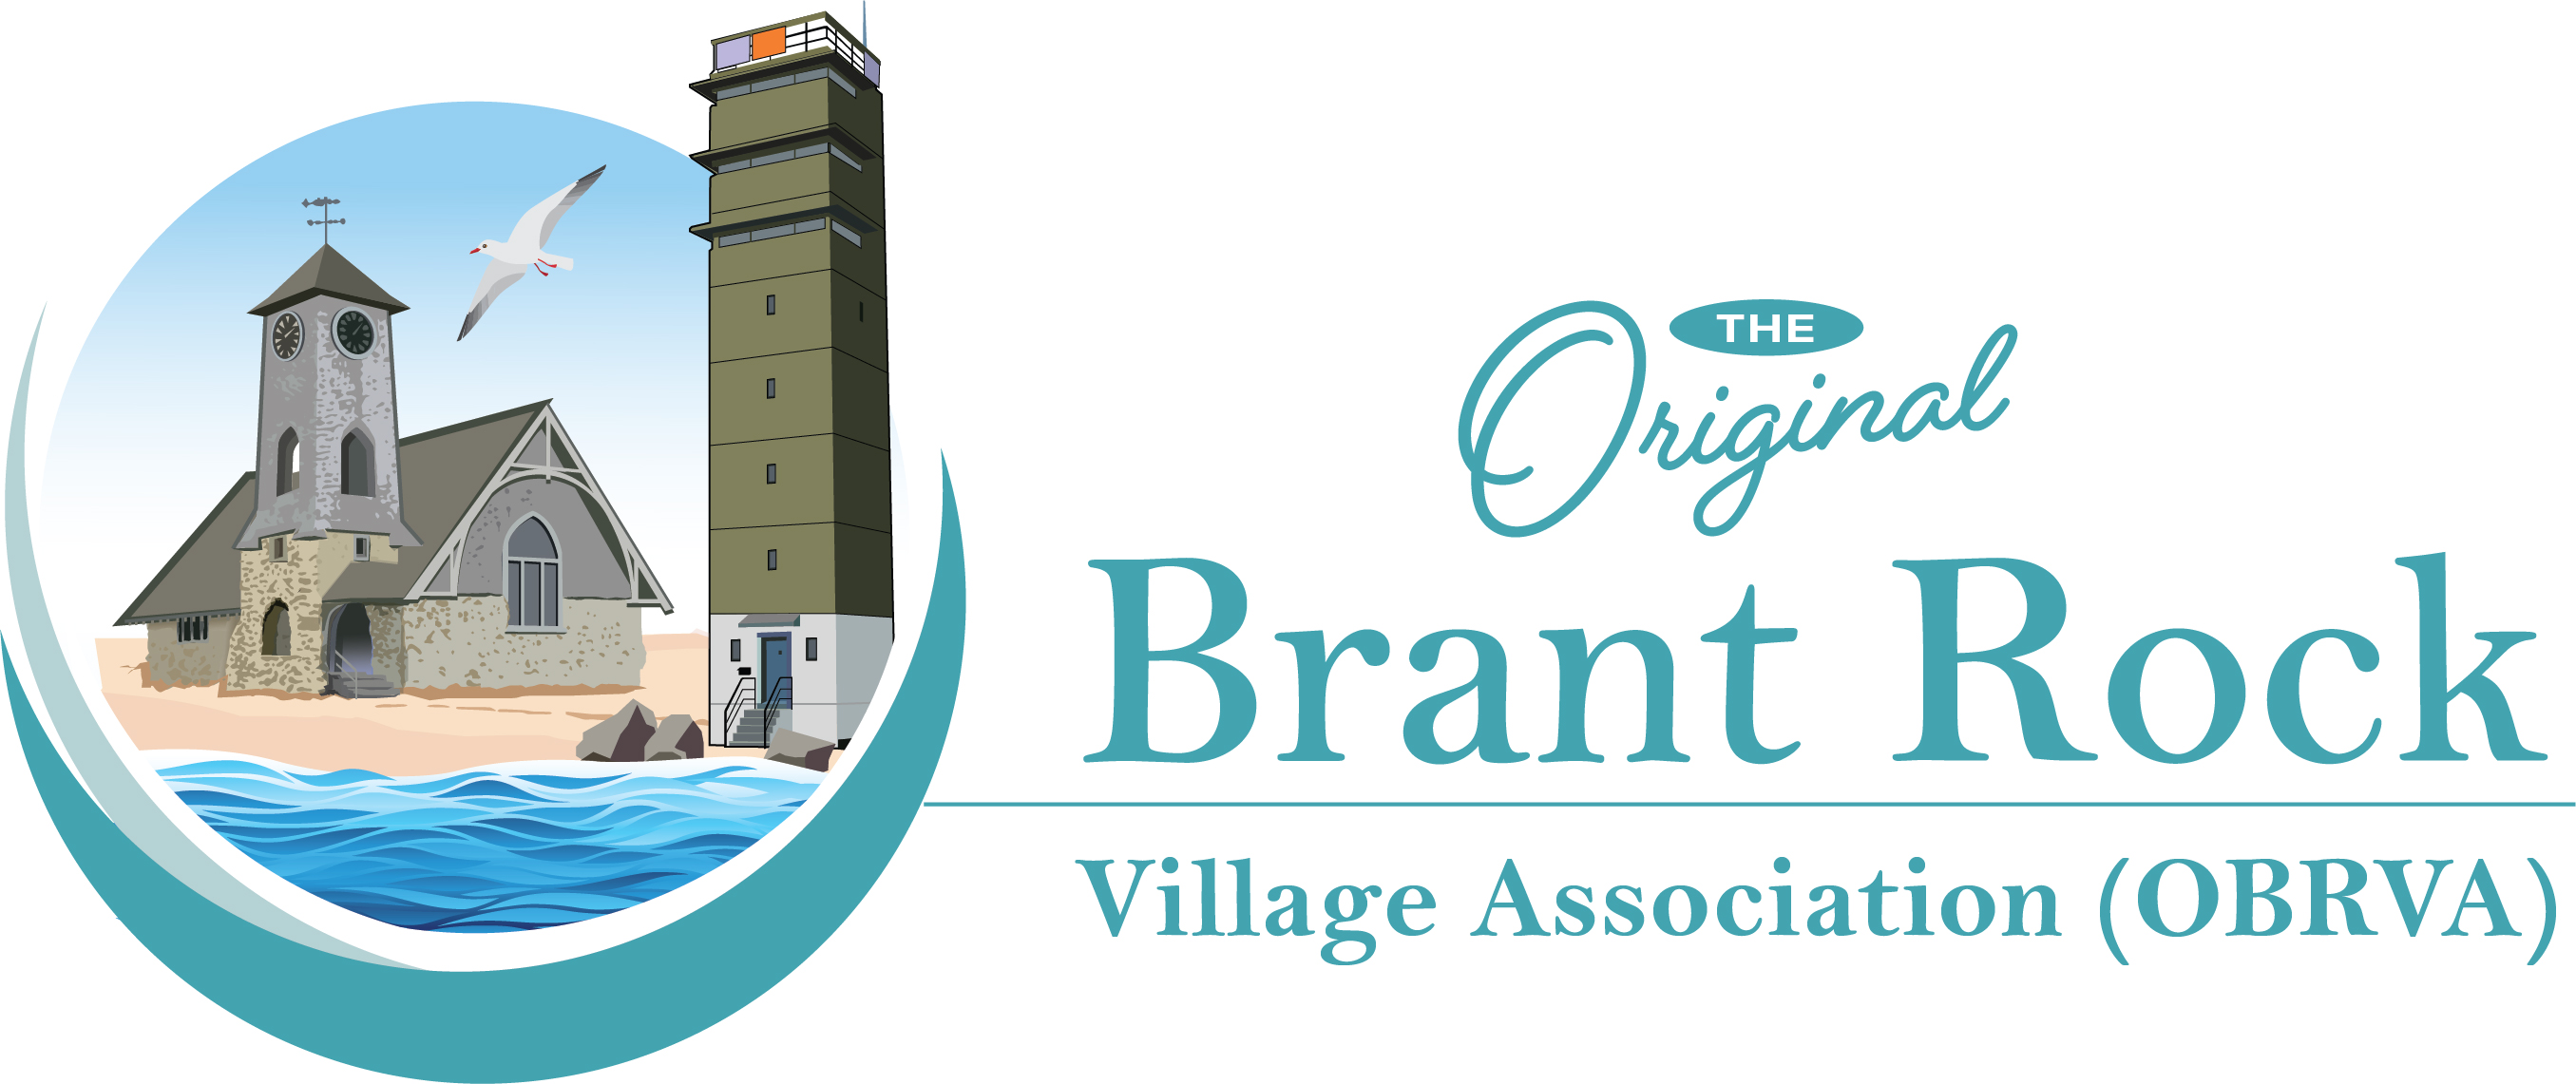 Original Brant Rock Village Association